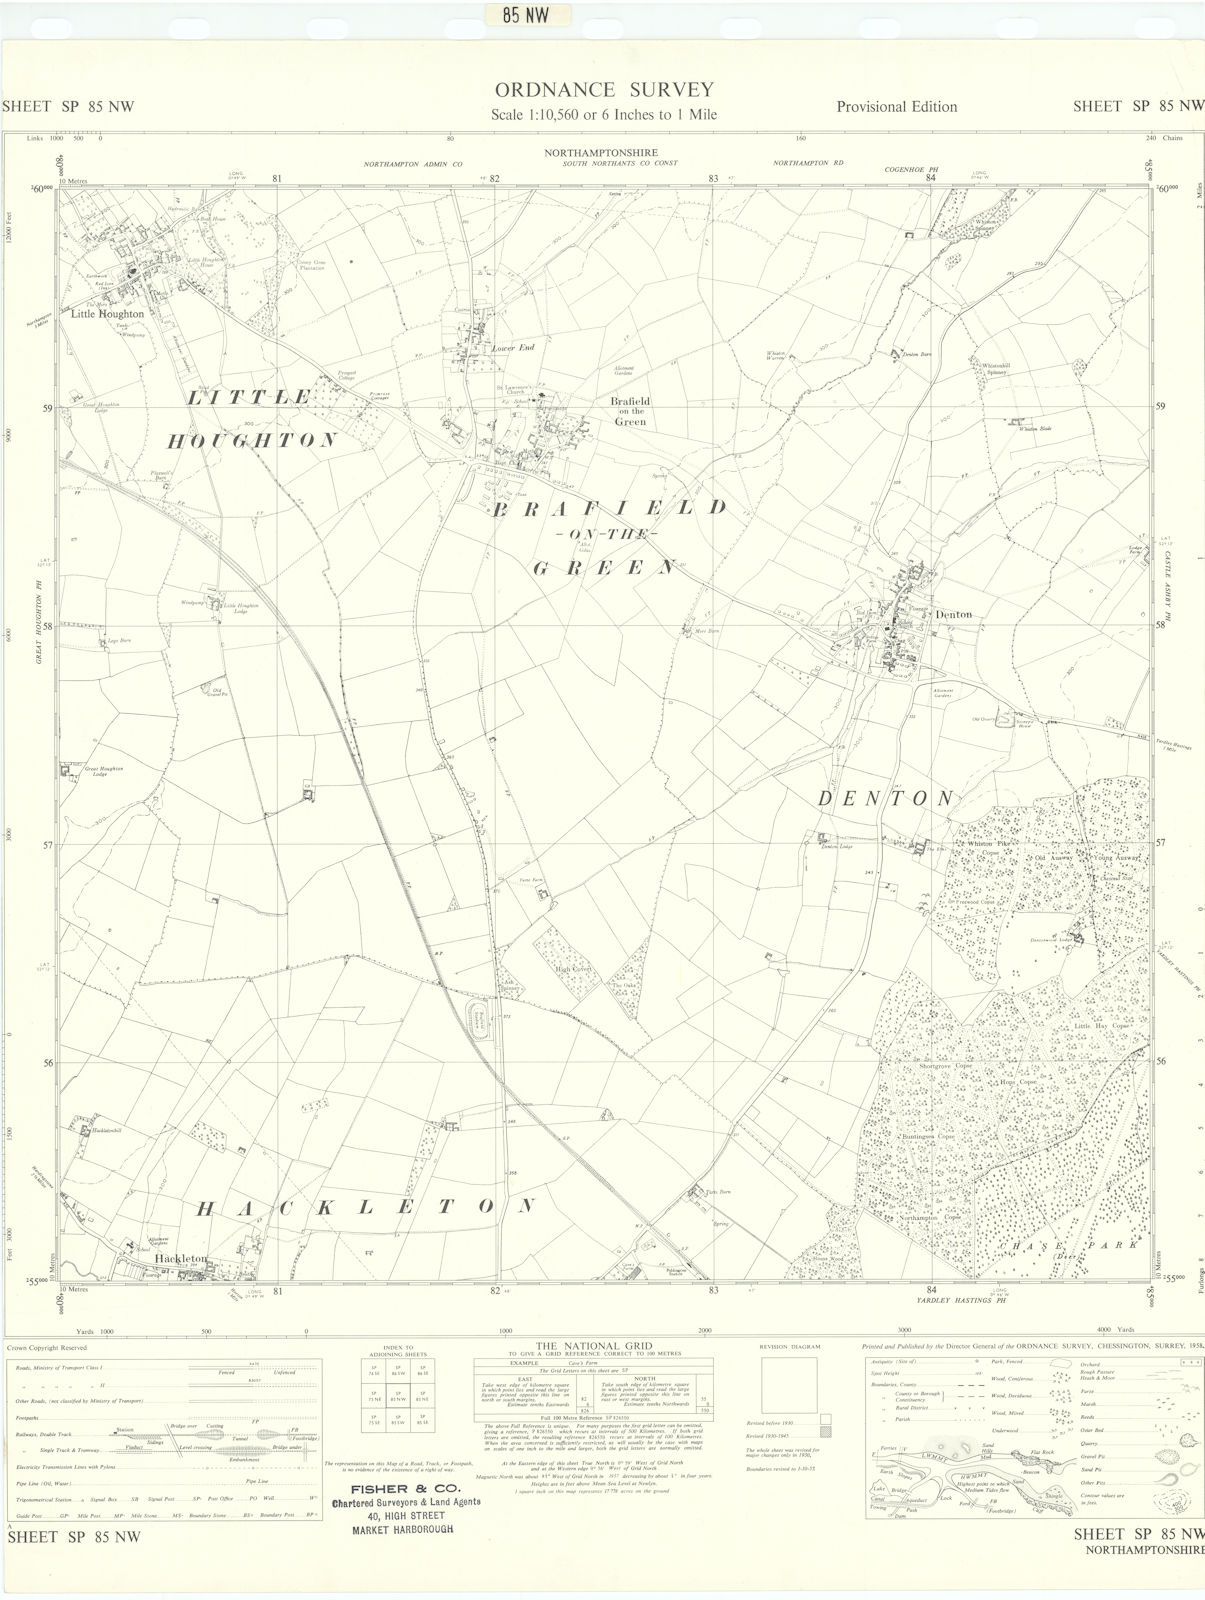 Ordnance Survey SP85NW Northants Little Houghton Denton Brafield/Green 1958 map